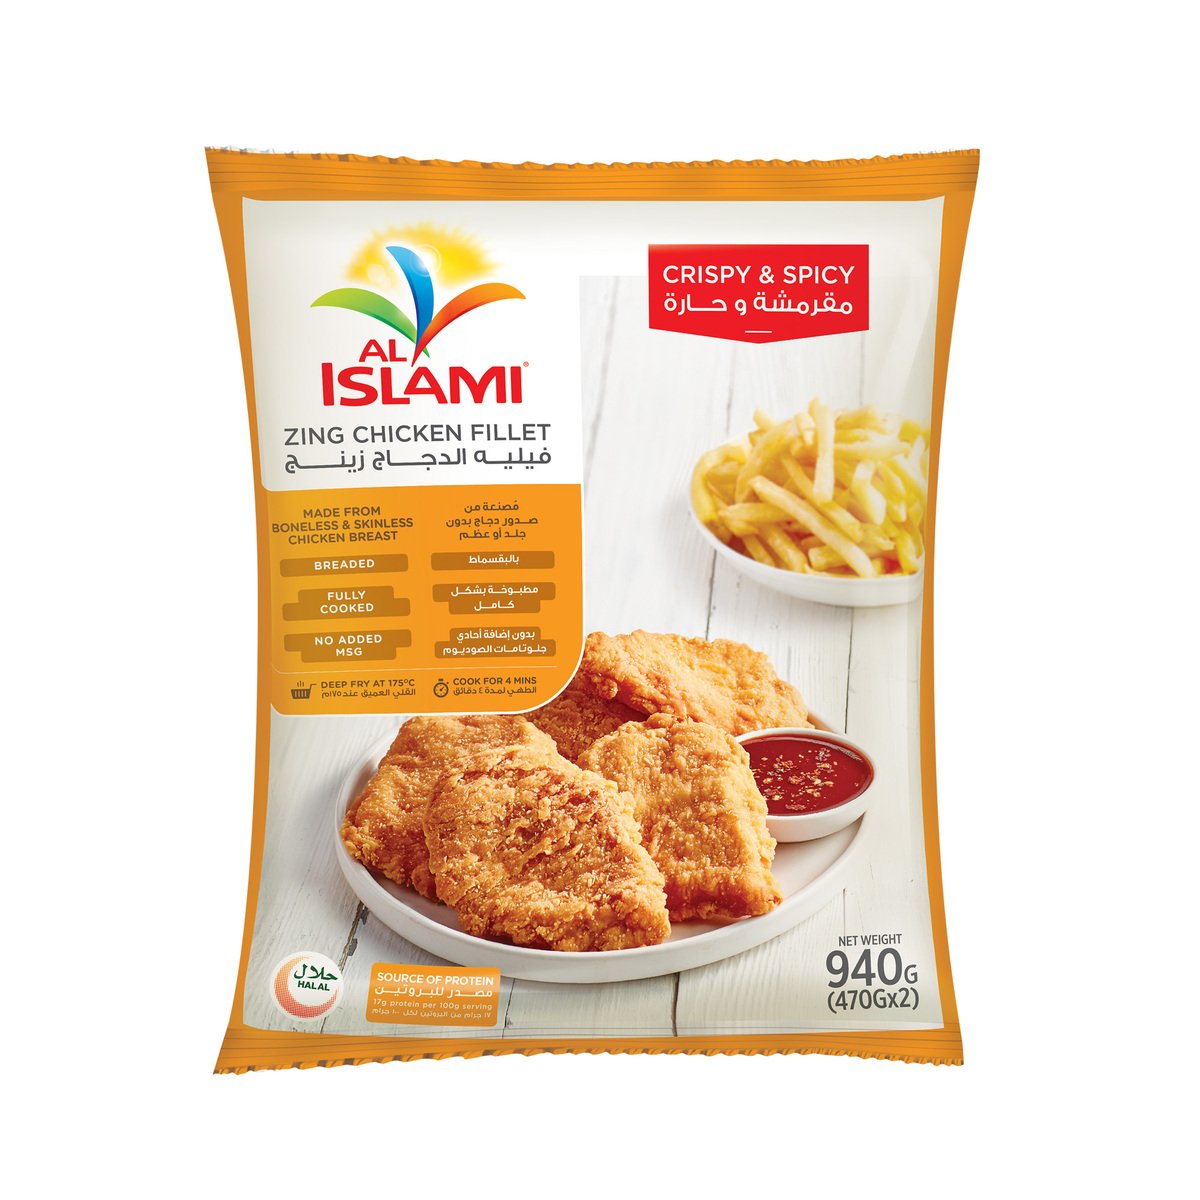 Al Islami Zing Chicken Fillet Crispy & Spicy 940 g